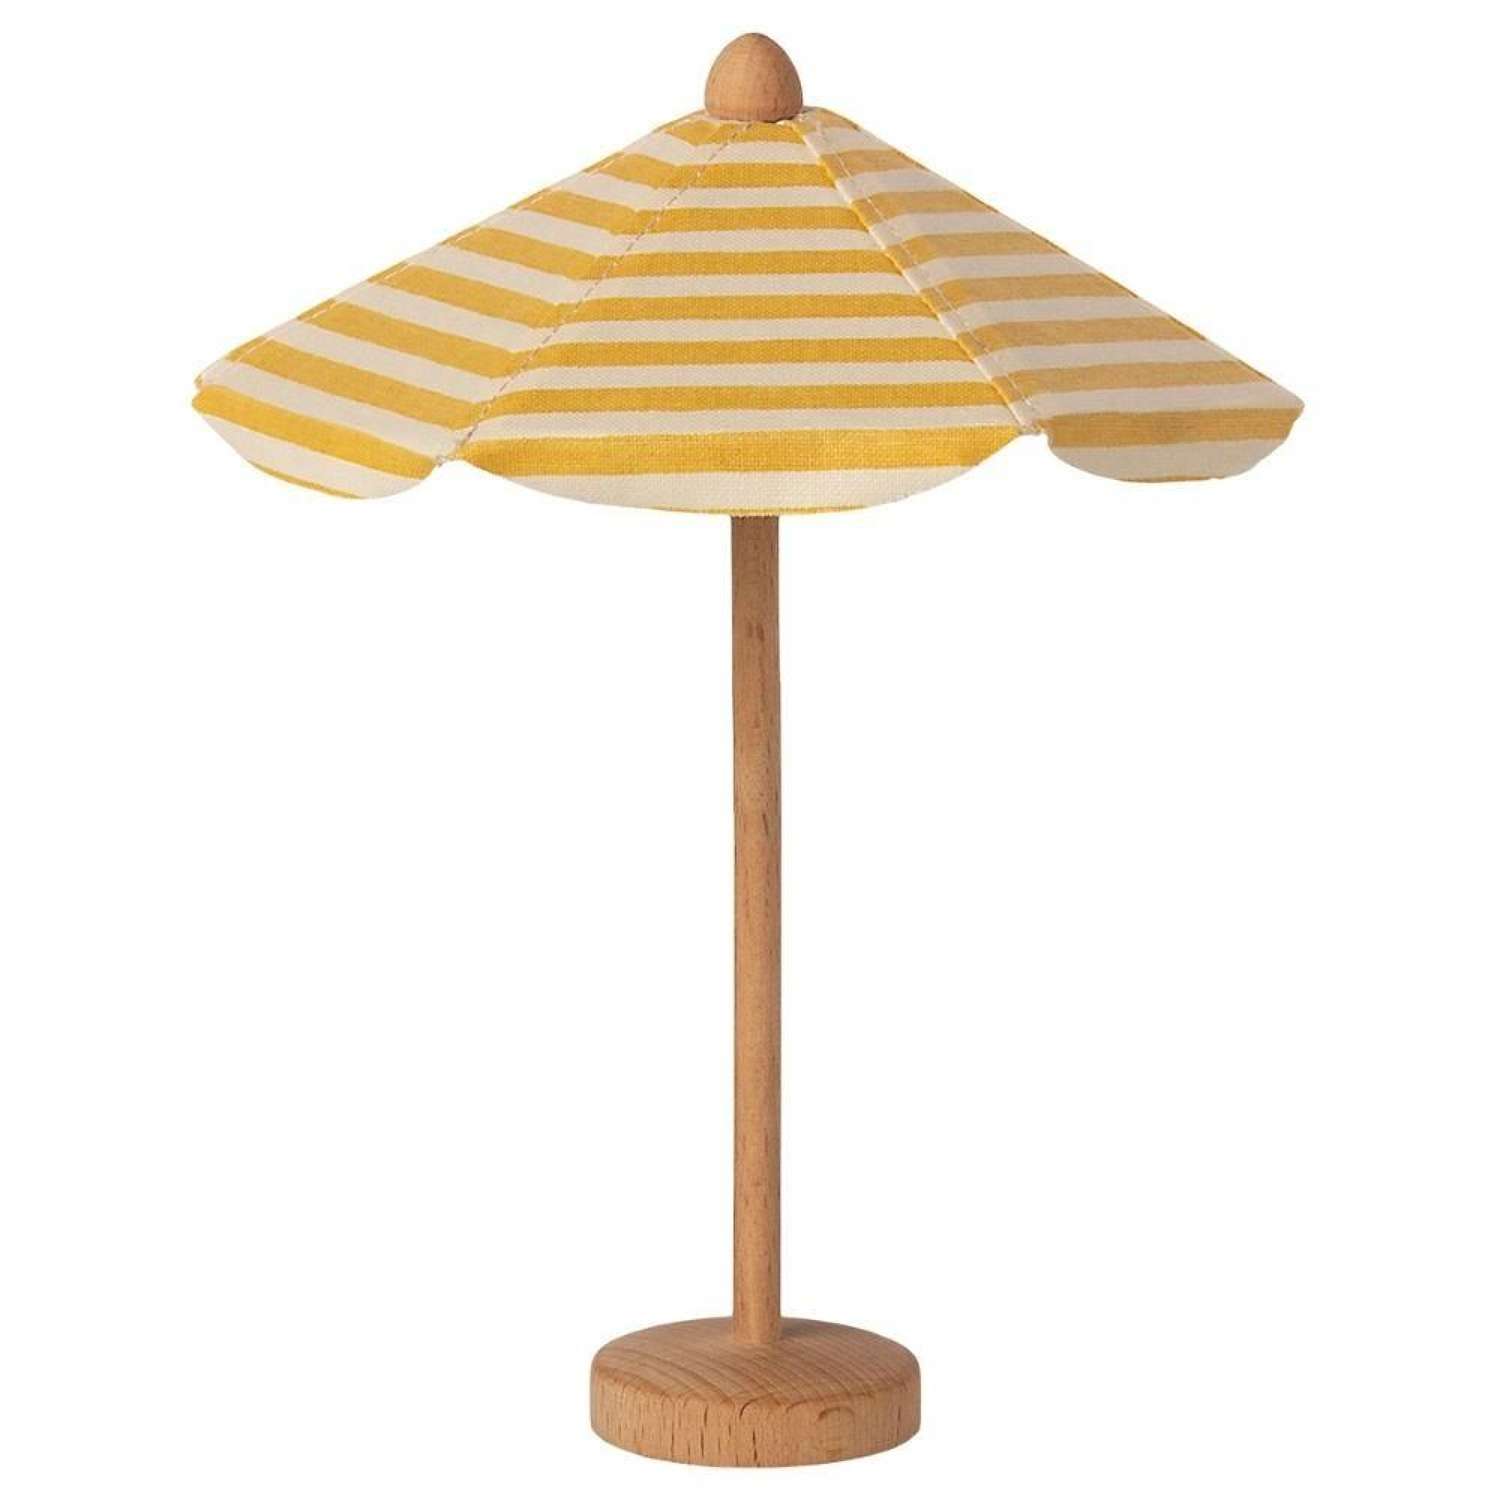 Maileg - Beach umbrella -small umbrella made of fabric with wood stand